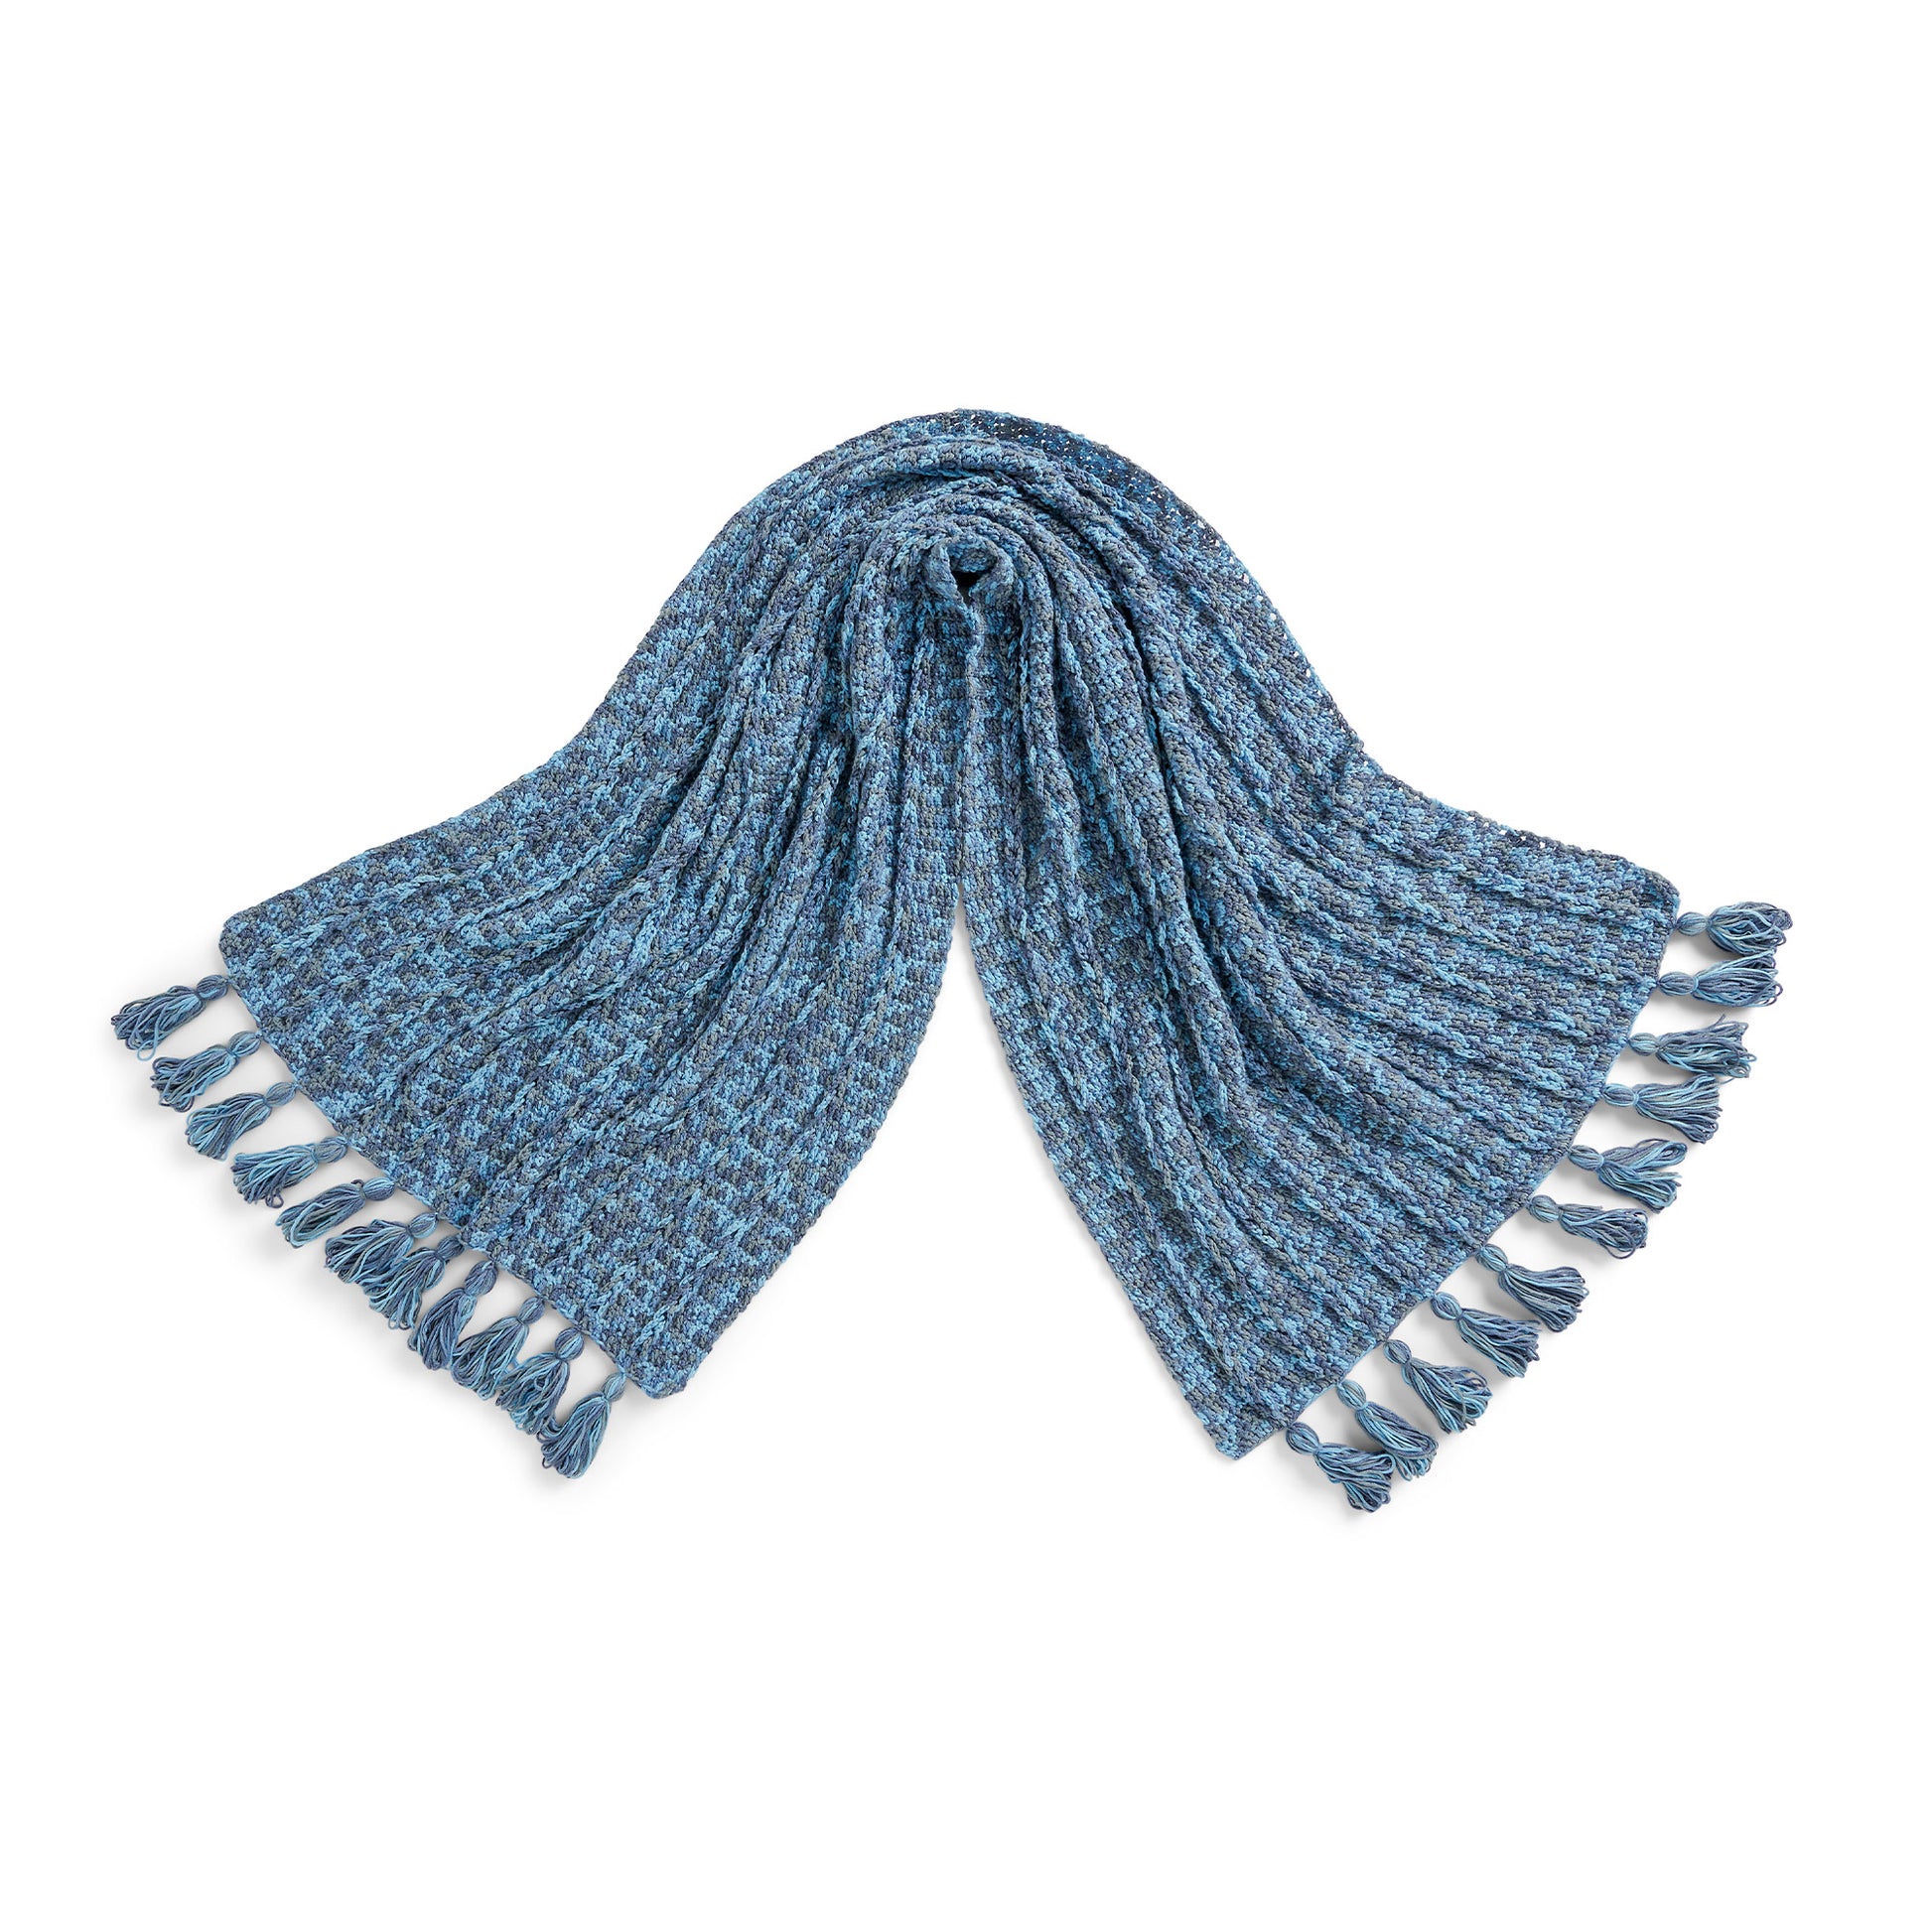 Free Caron Chain Ridge Crochet Shawl Pattern